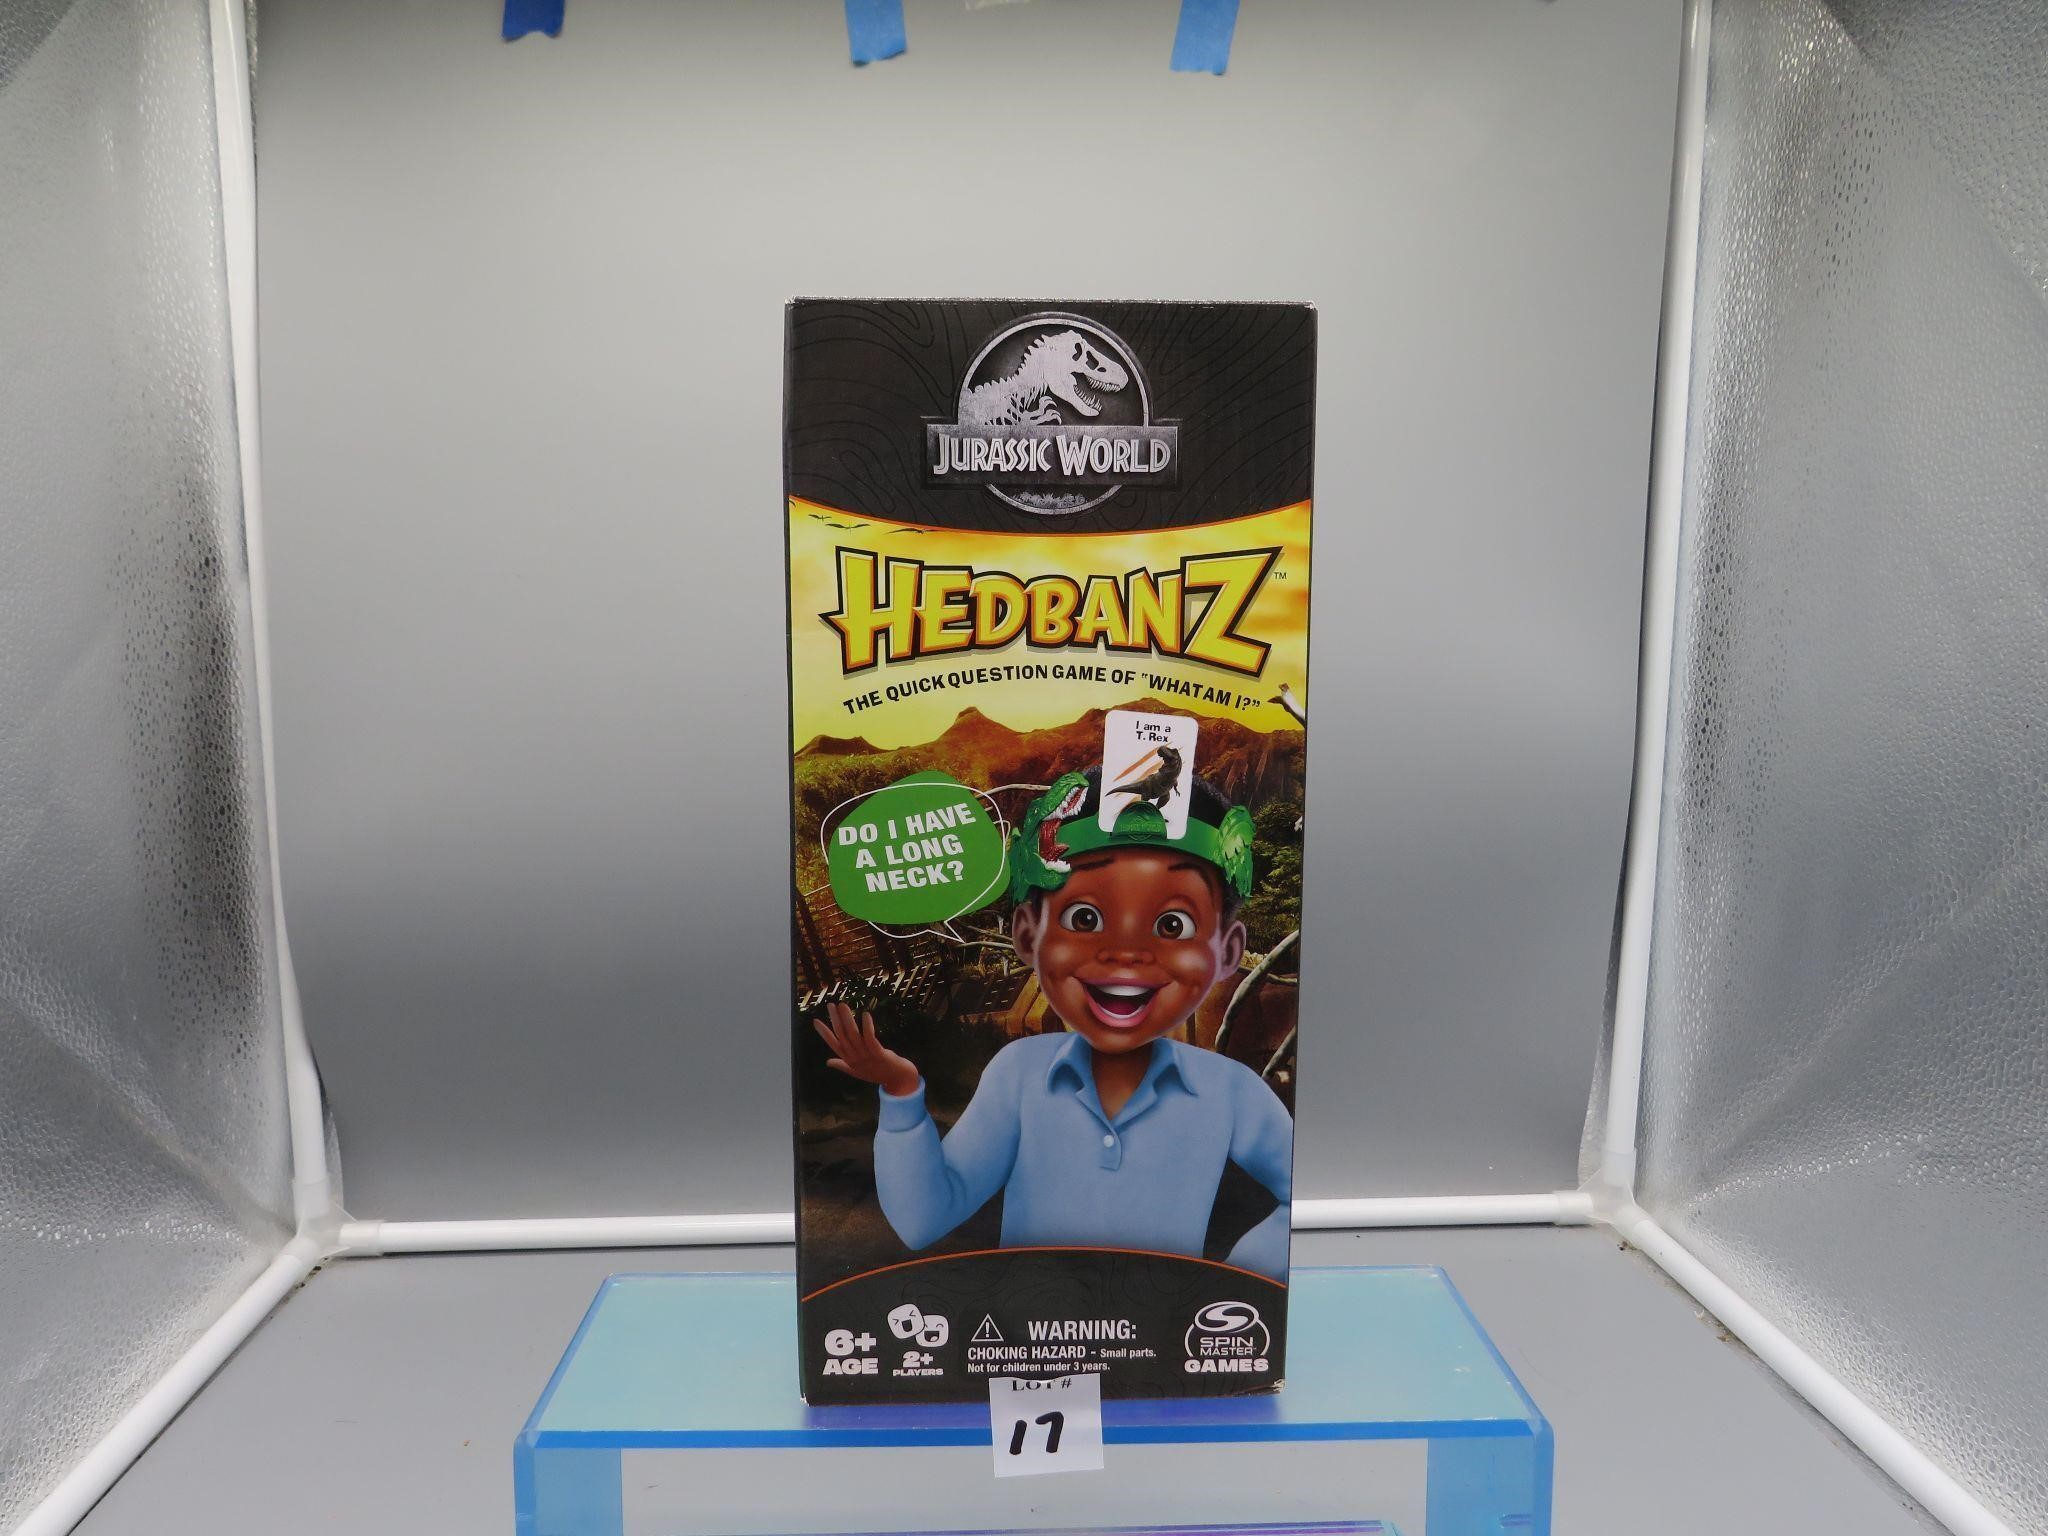 Jurassic World Hedbonz, new in pack